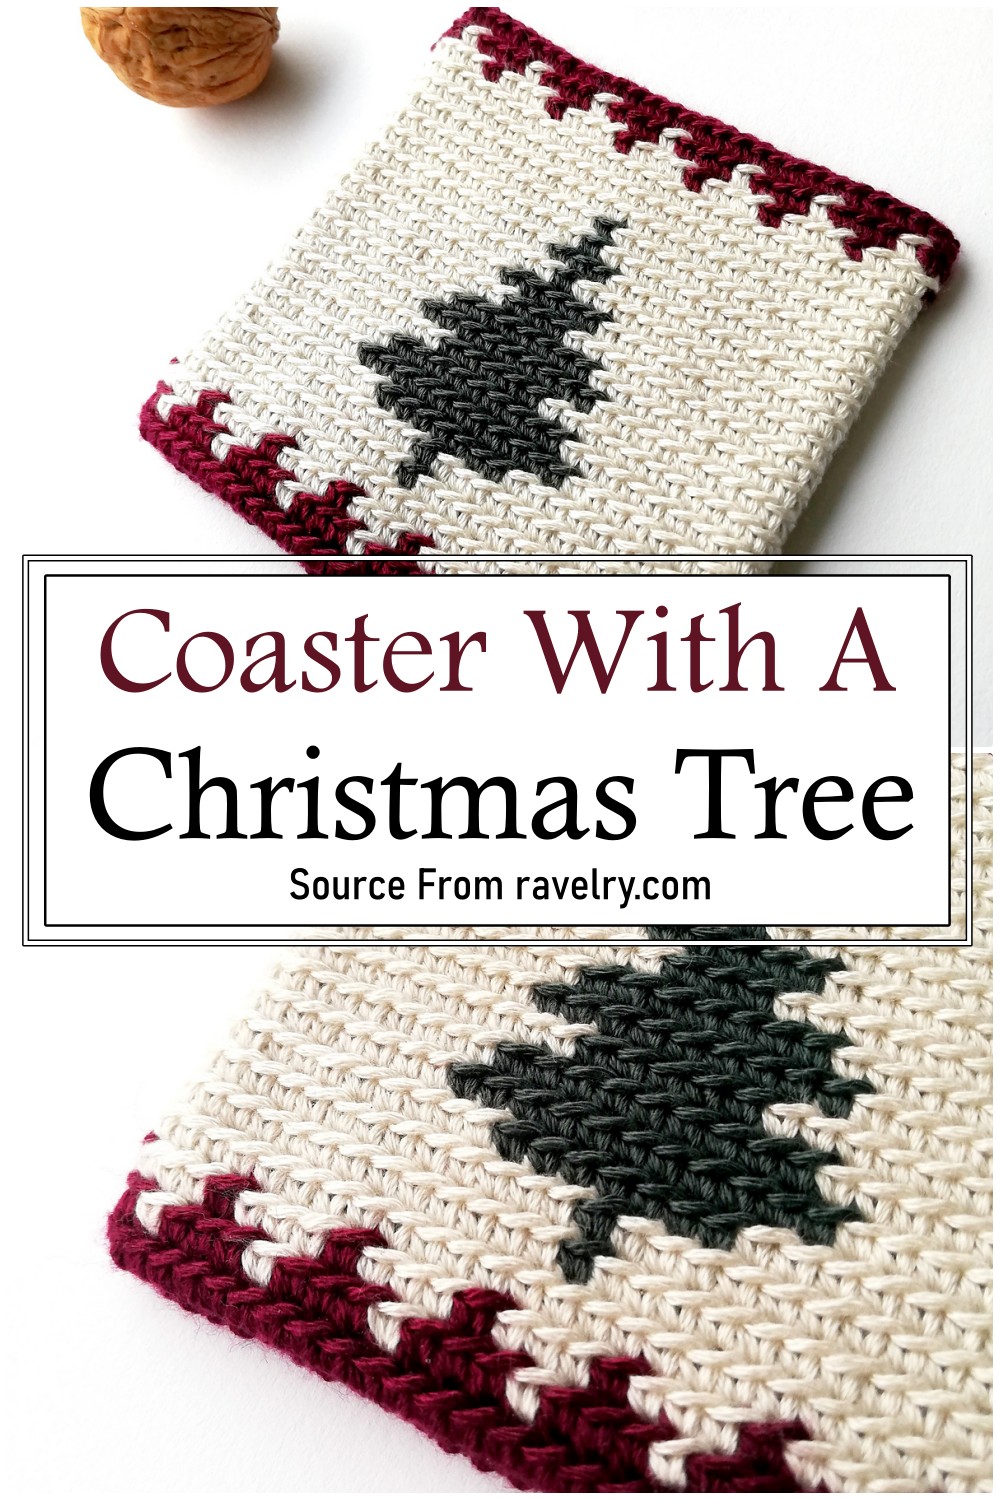 Coaster With A Christmas Tree